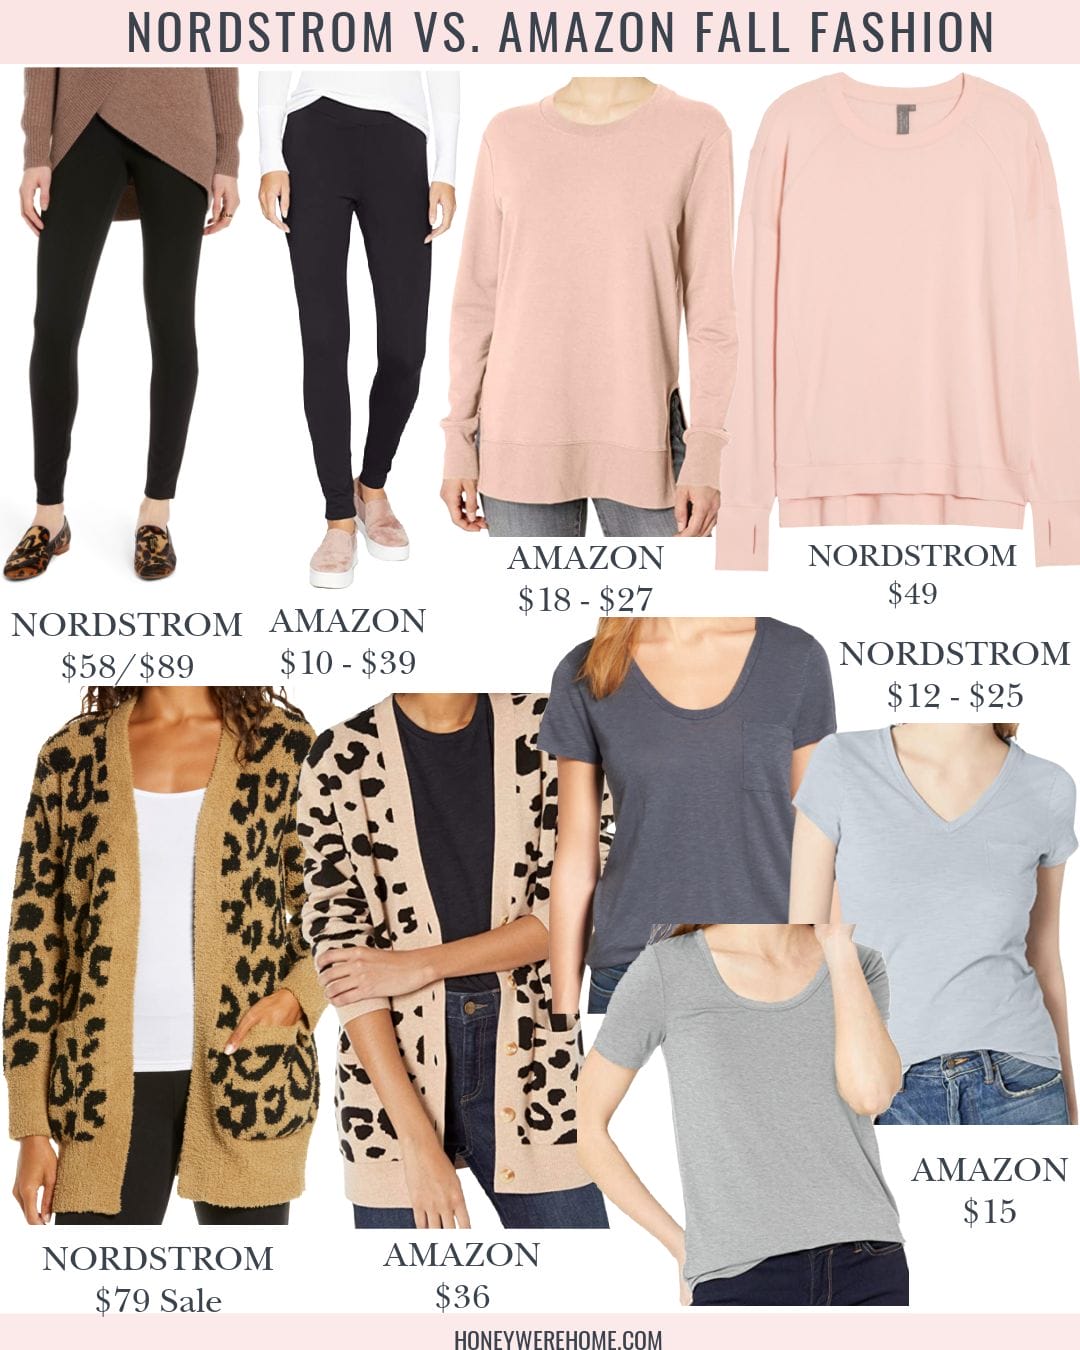 Nordstrom v. Amazon Fall Fashion